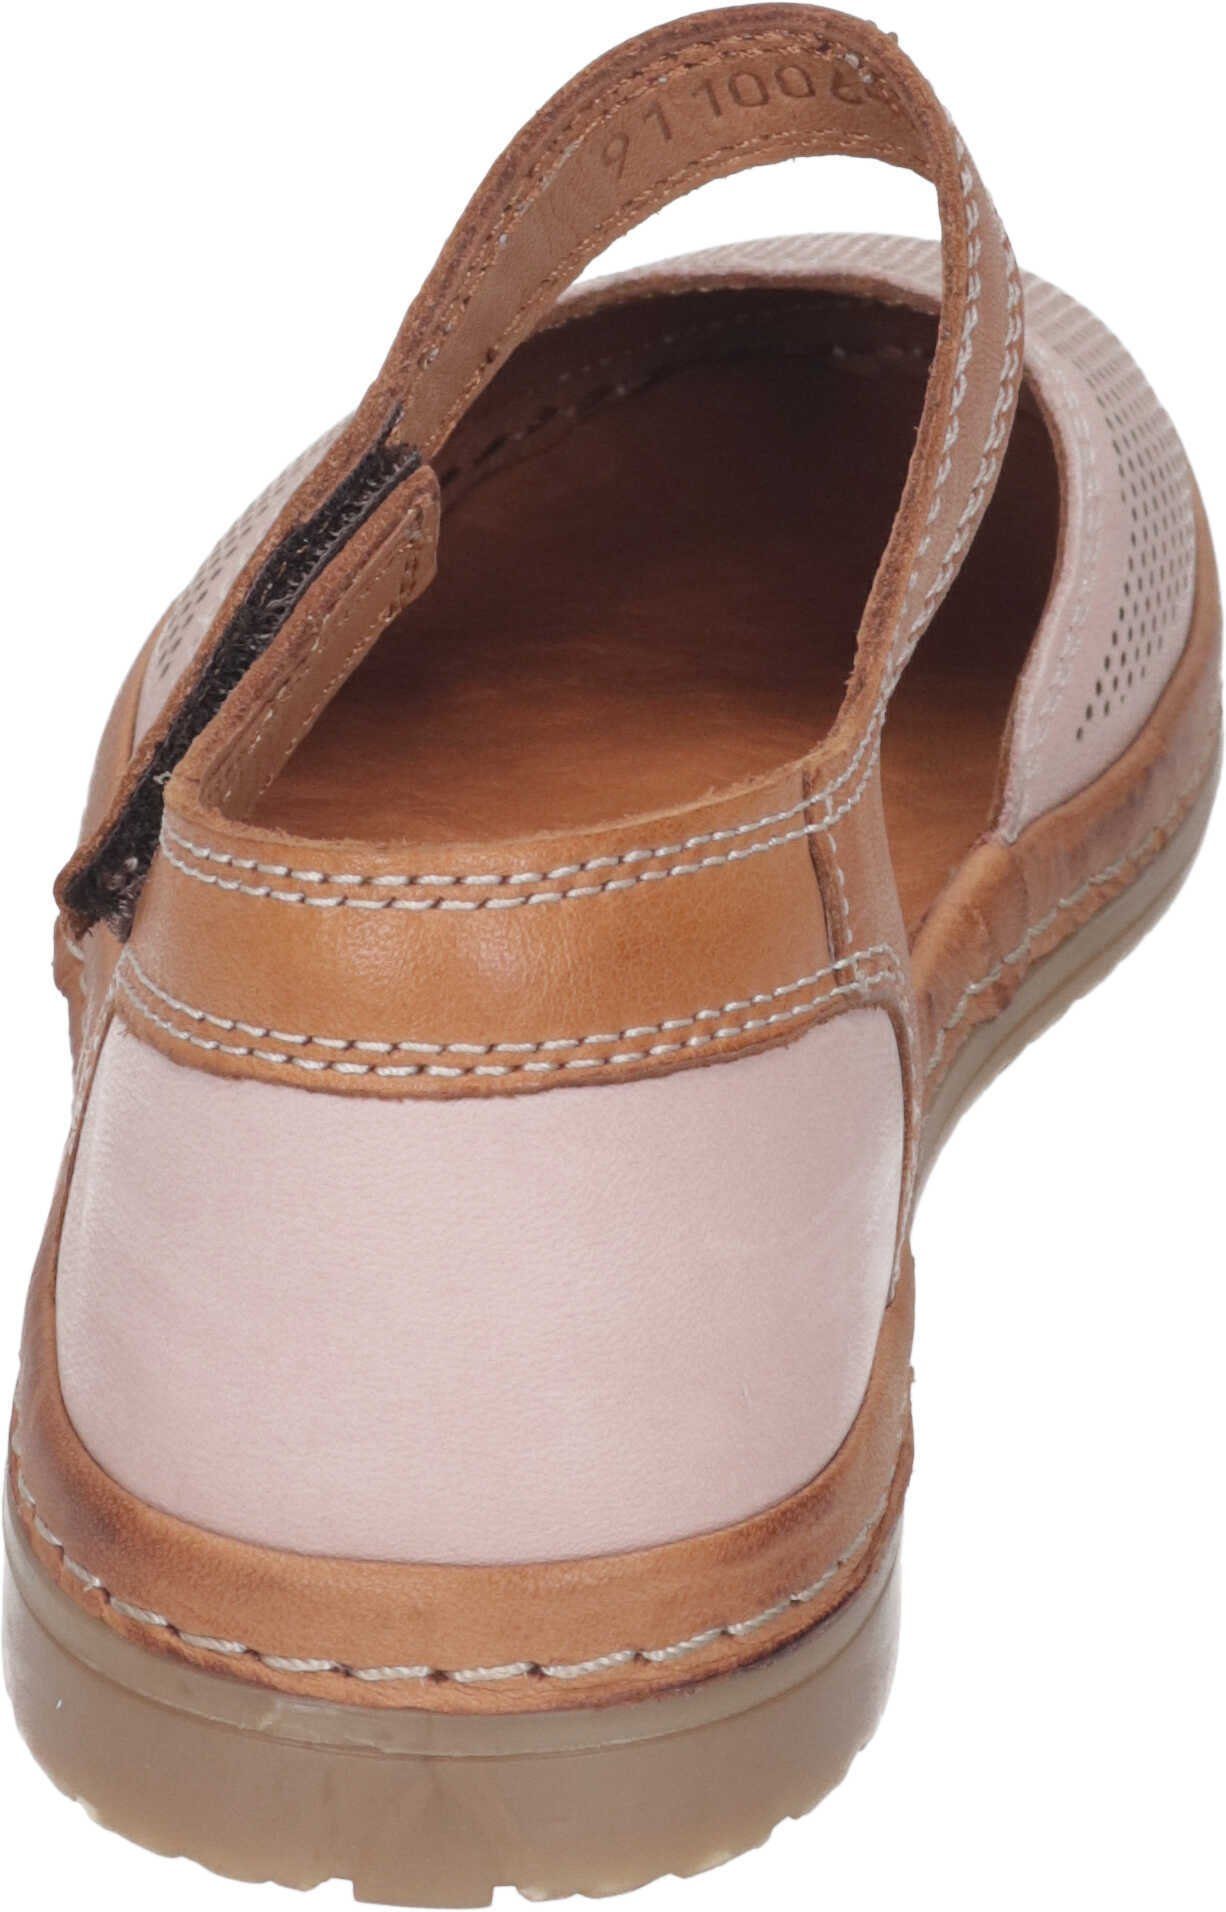 Sandalen Sandalette rosa aus Leder Manitu echtem